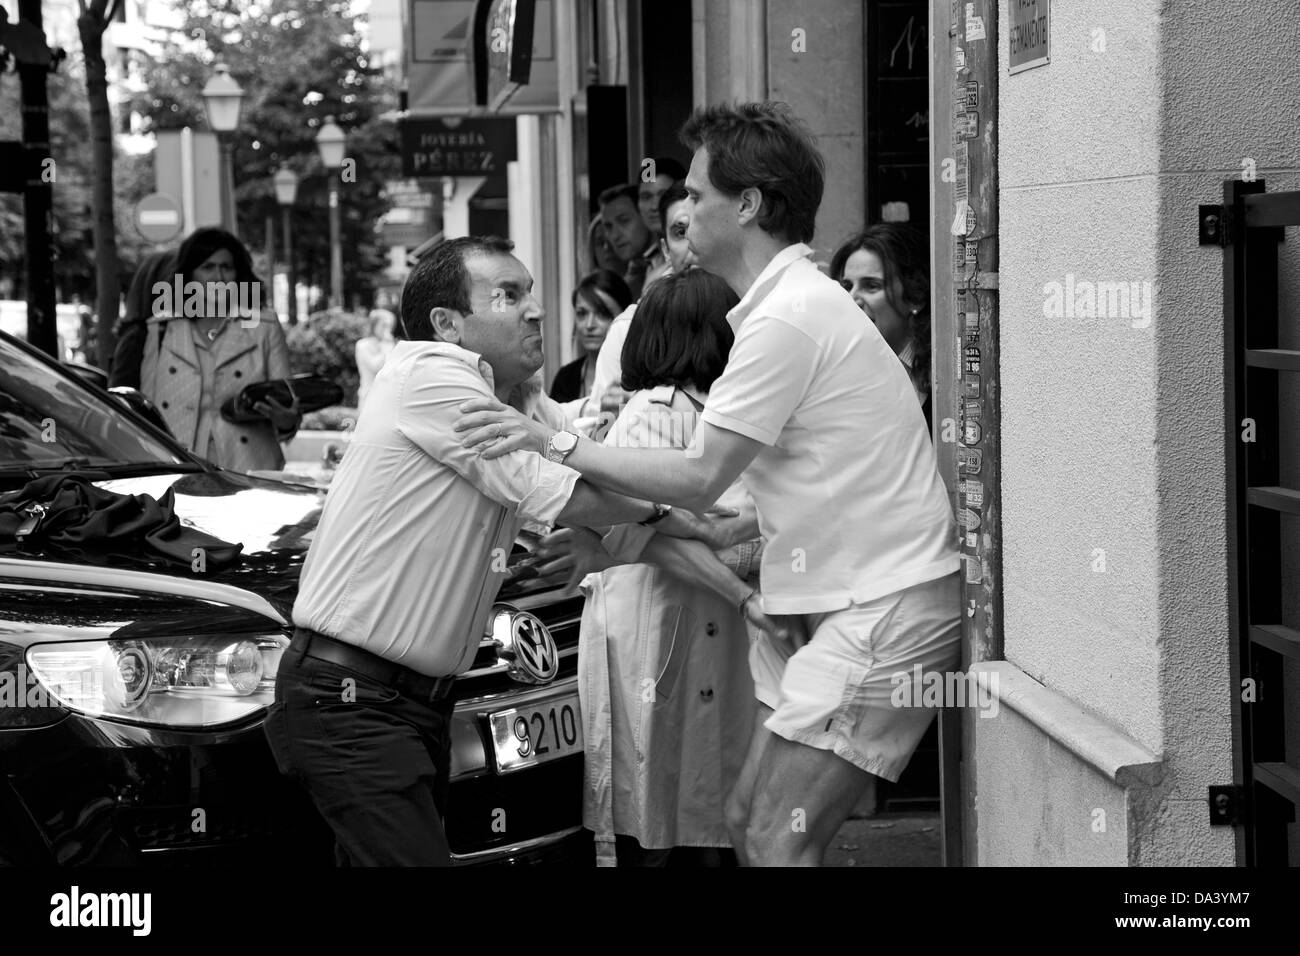 Street brawl, Madrid, Spagna Foto Stock